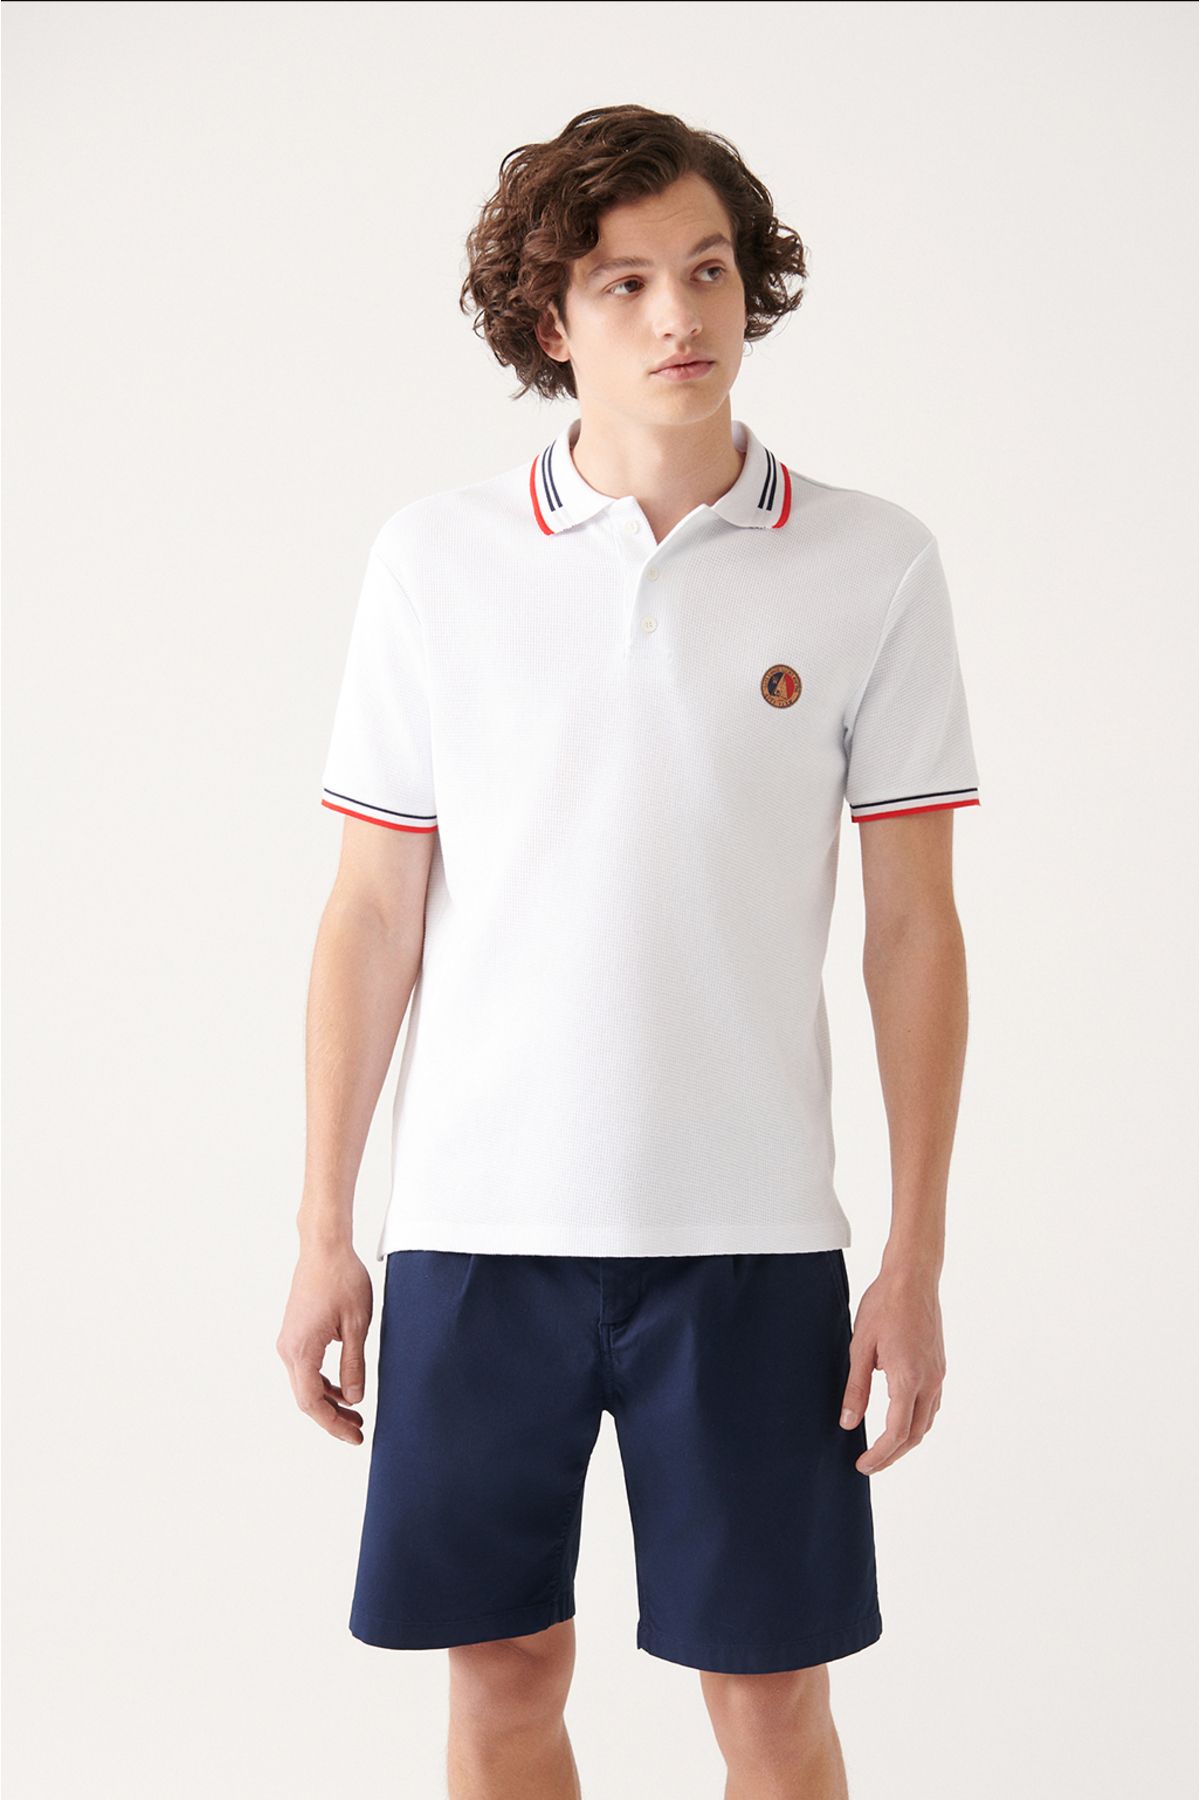 Avva تی شرت یقه پولو برش معمولی مردانه سفید 100% نخی با بافت آجدار دریایی چاپ استاندارد متناسب